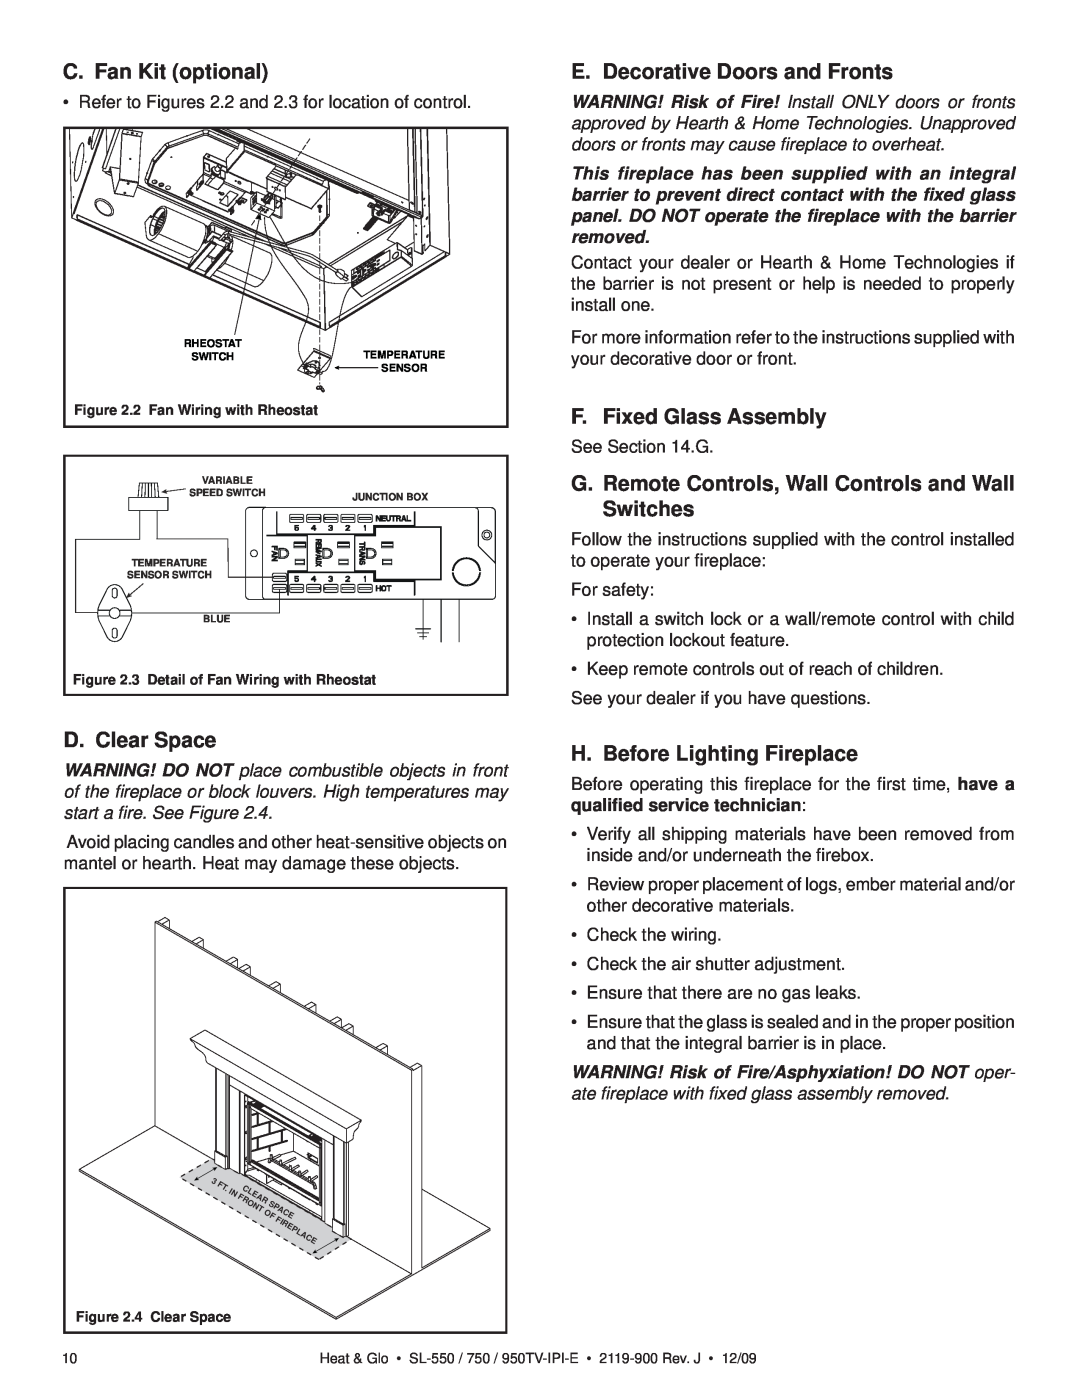 Heat & Glo LifeStyle SL-750TV-IPI-E C. Fan Kit optional, E. Decorative Doors and Fronts, F. Fixed Glass Assembly 